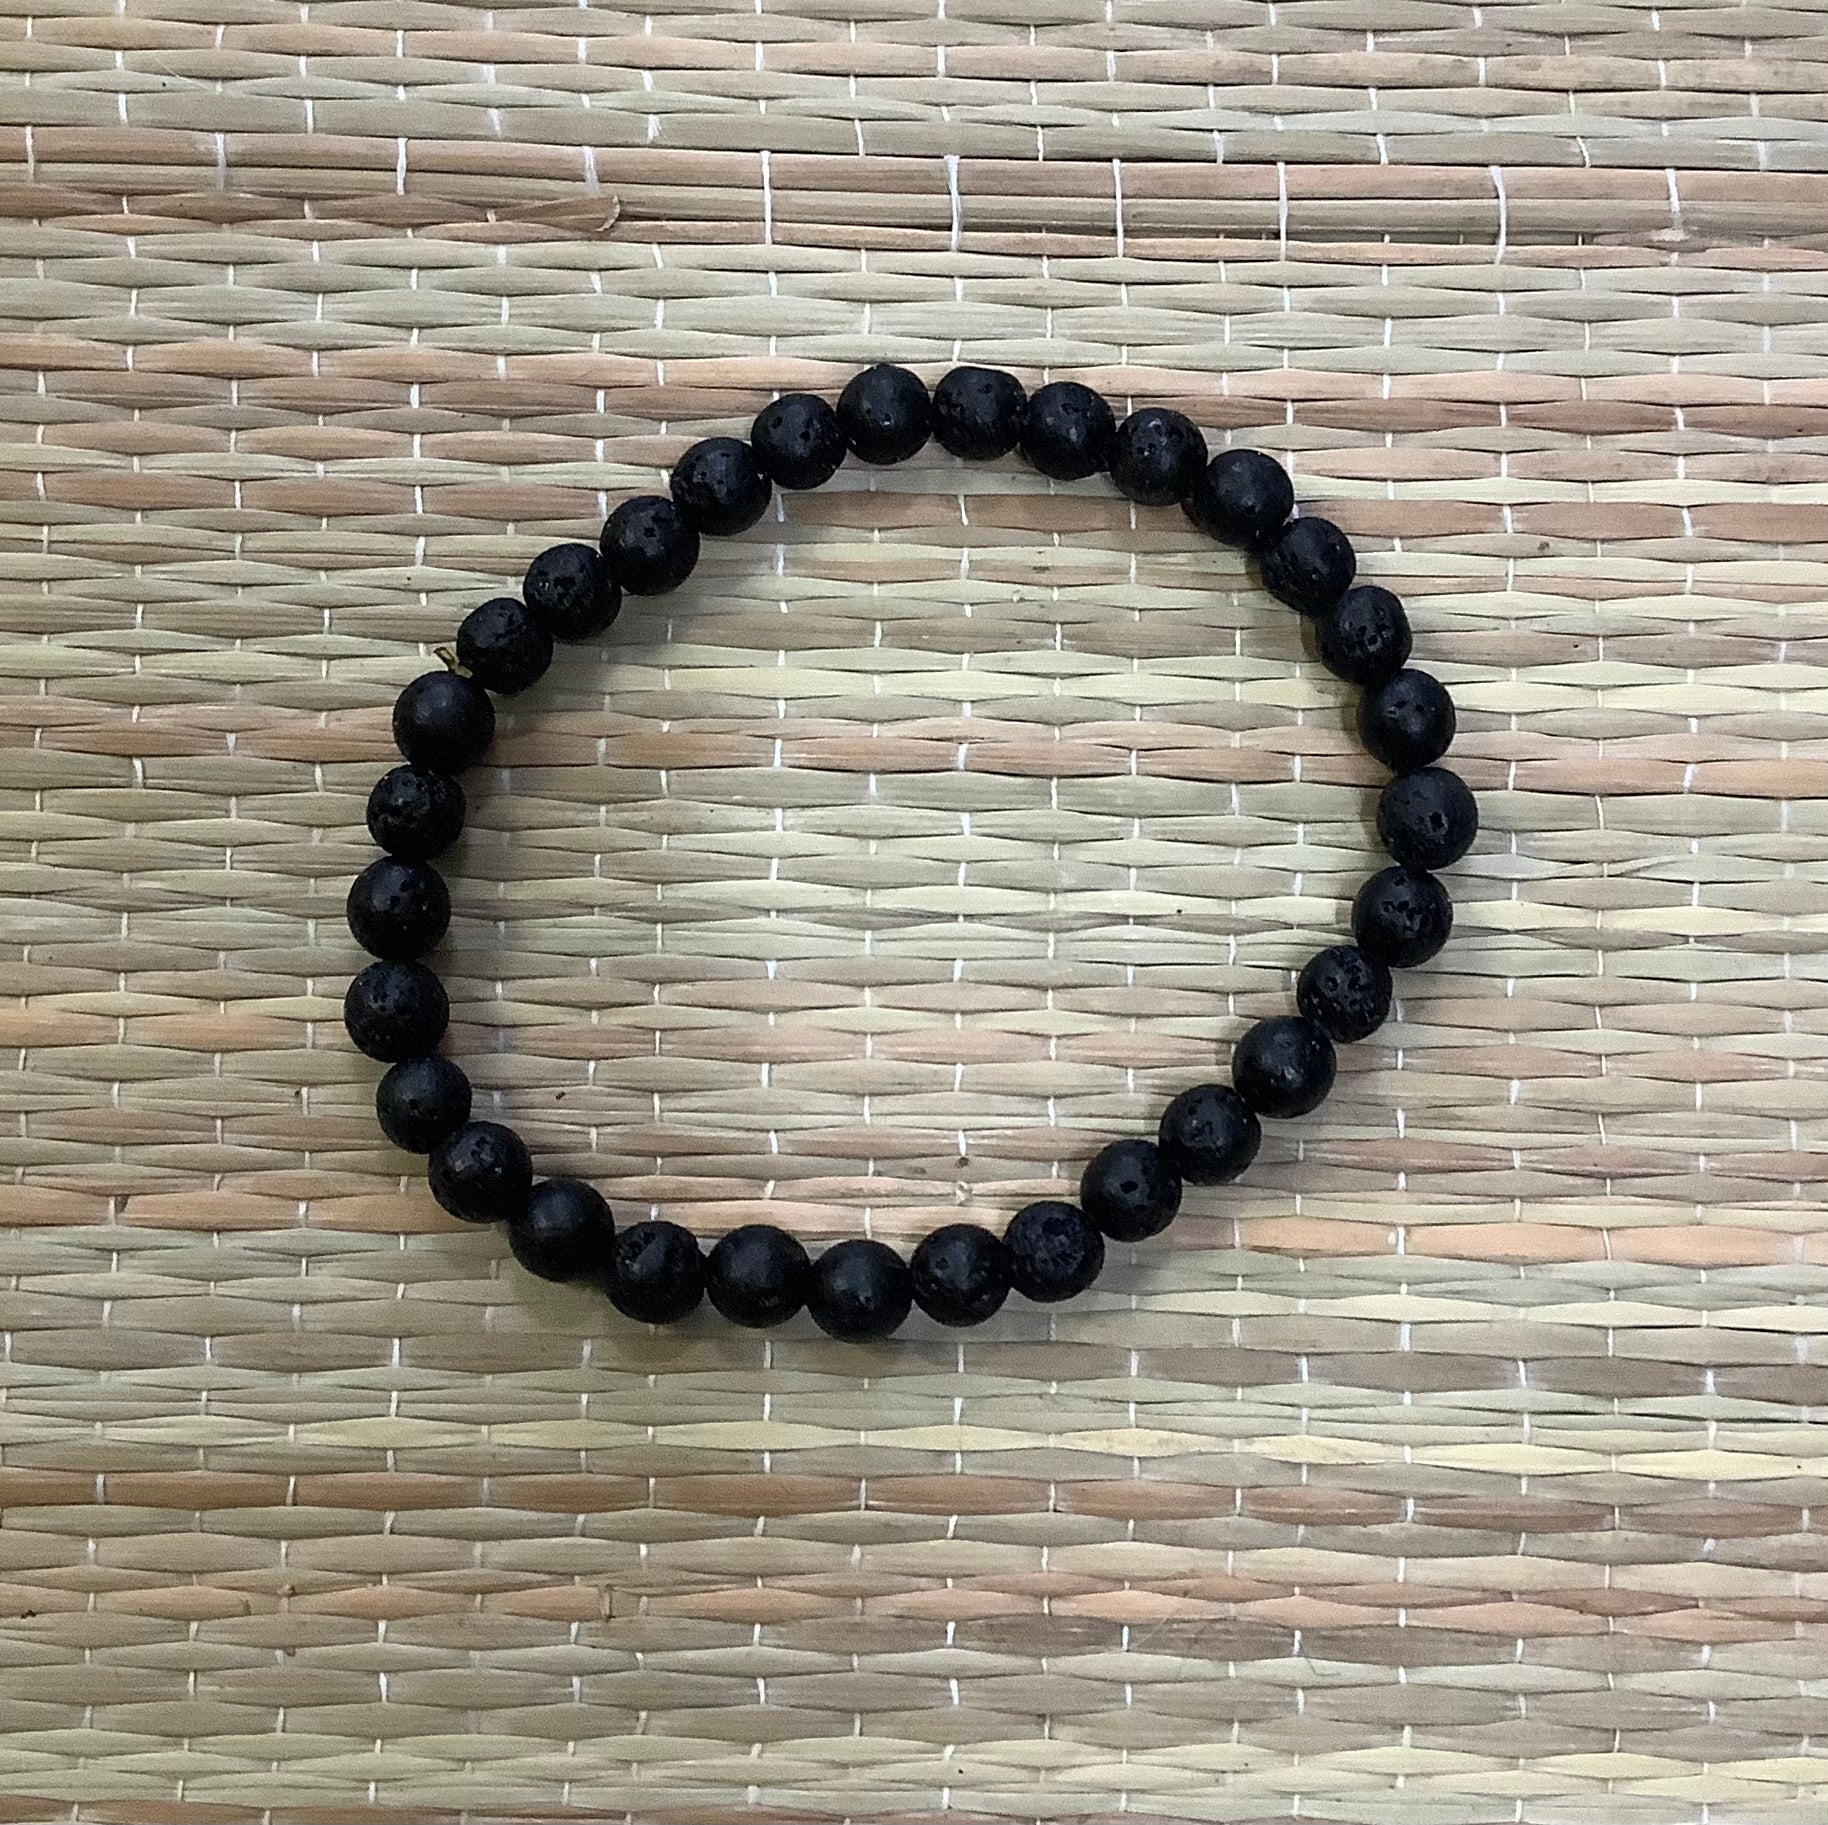 10mm Round, Natural Black Lava Beads, Volcanic Rock (16 Str